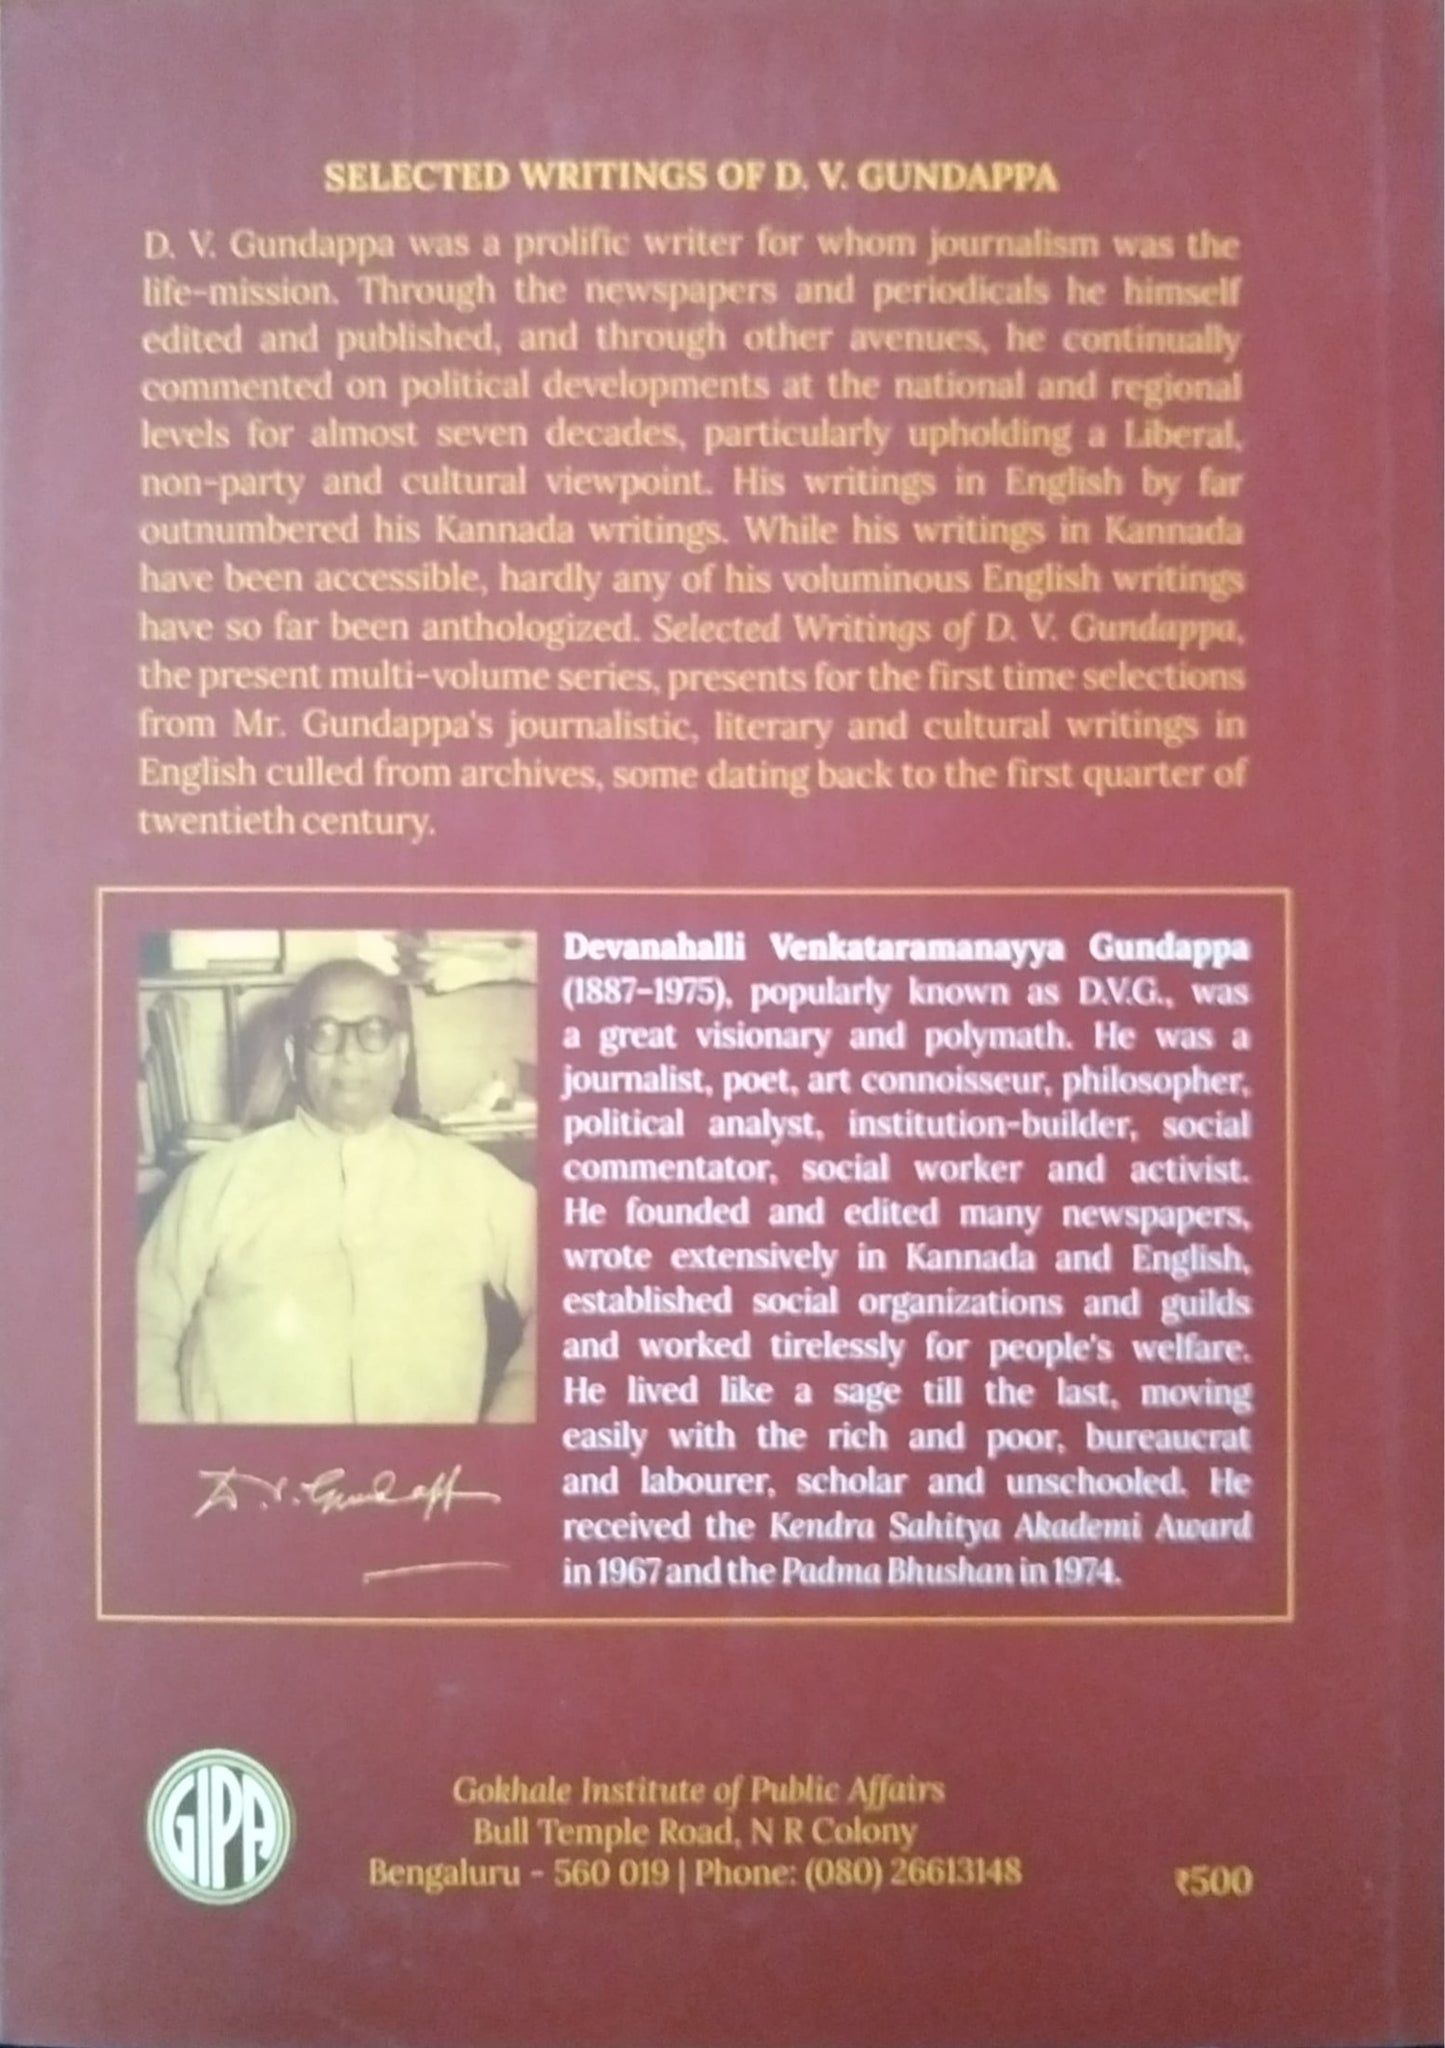 Selected Writings of D. V. Gundappa - 5